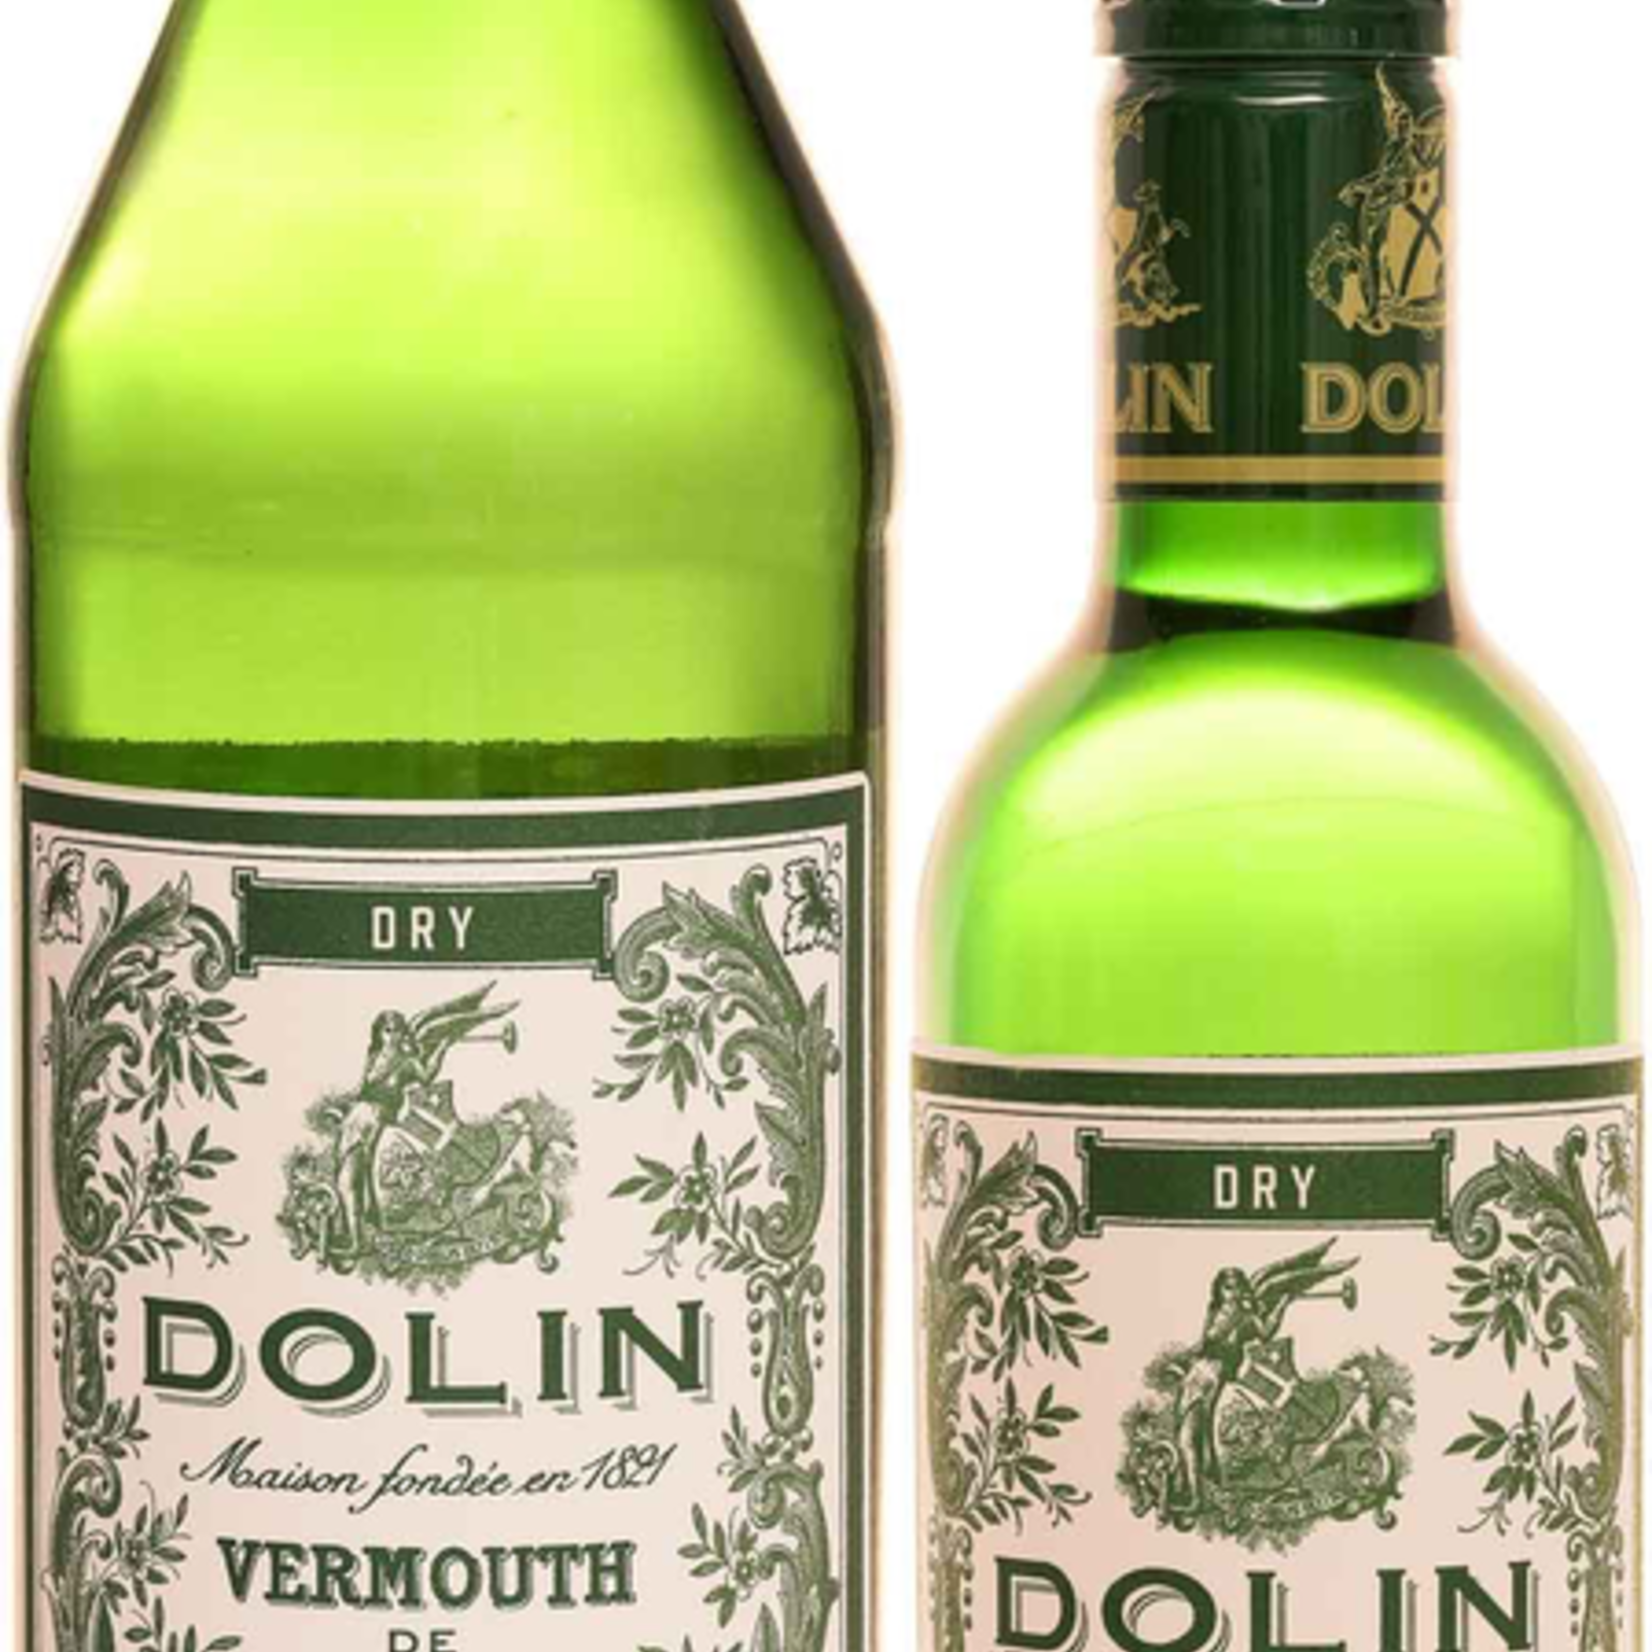 France Dolin Dry Vermouth 375 mL